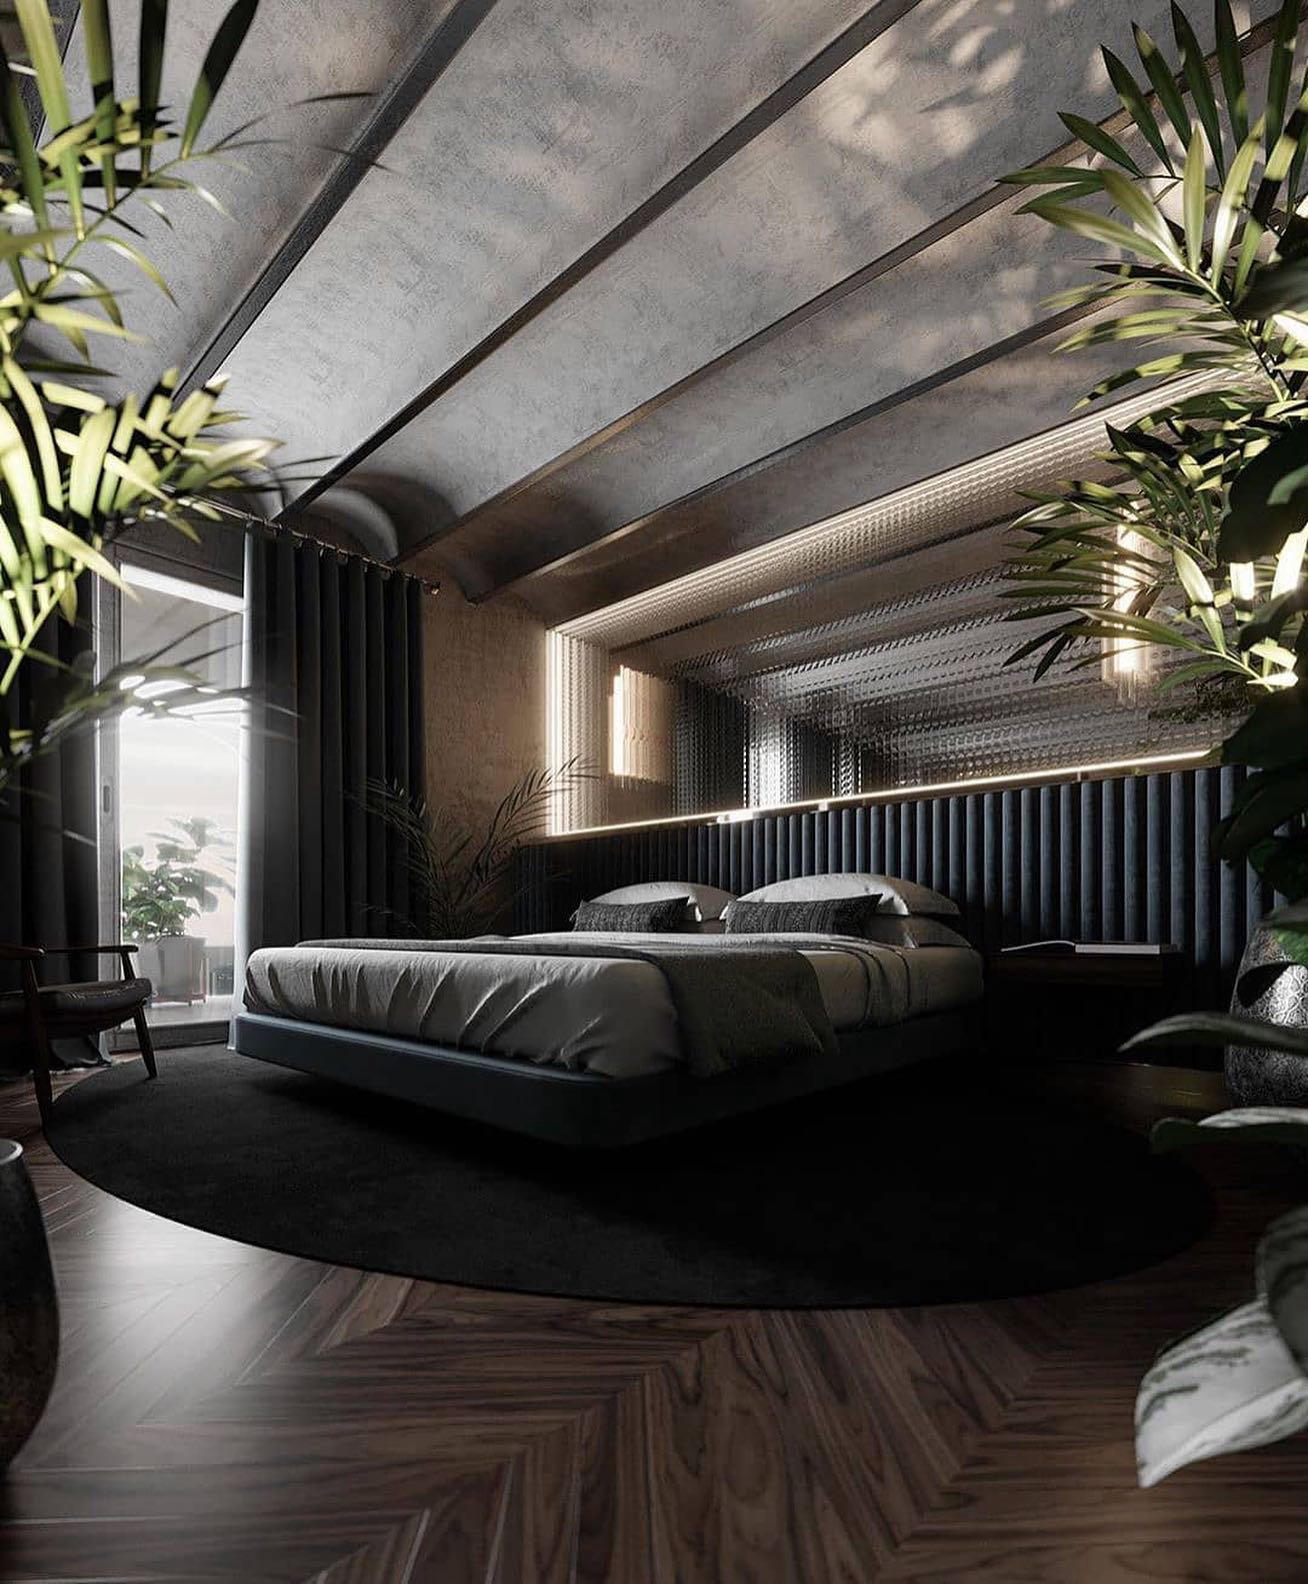 Architecture & Interior Design - Inspiring Bedroom by #dd_visualization_interiorsGet Inspired, visit